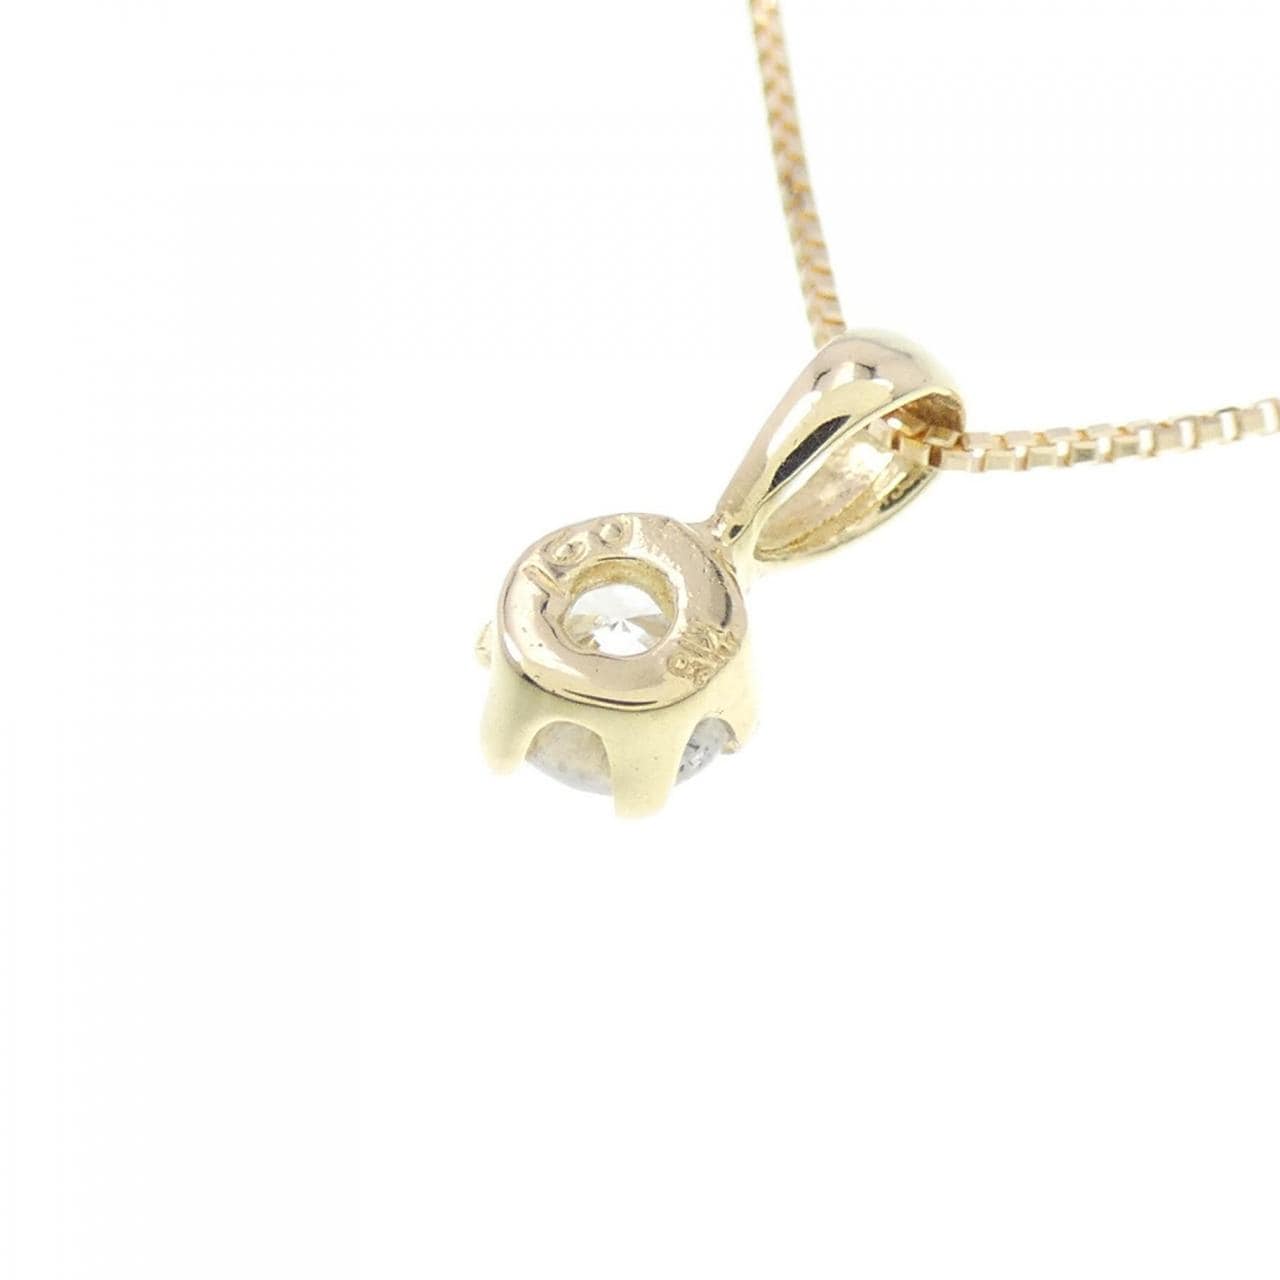 K18YG Solitaire Diamond Necklace 0.21CT